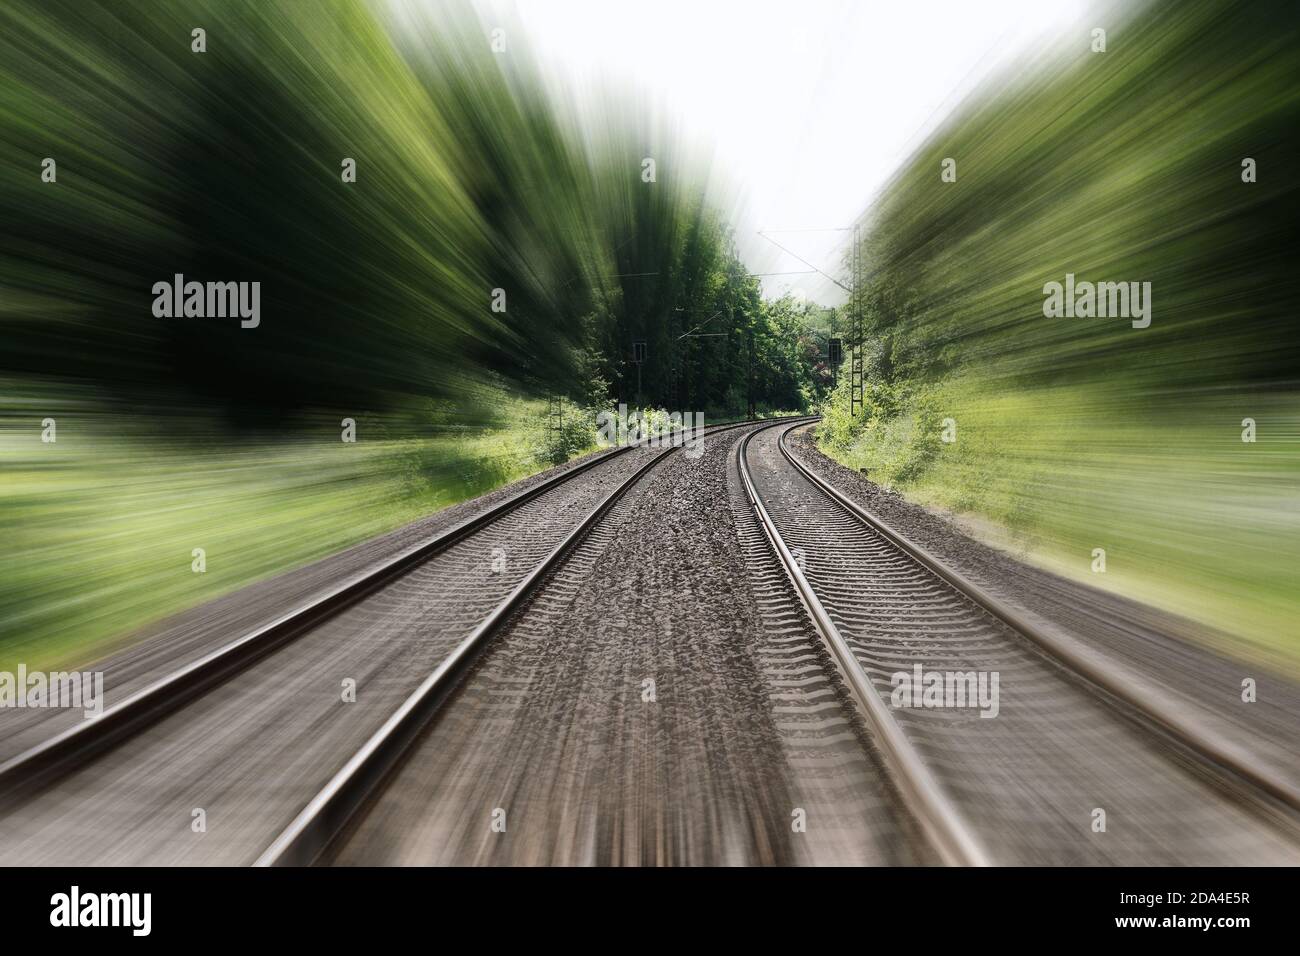 https://c8.alamy.com/comp/2DA4E5R/double-track-railroad-railway-or-train-tracks-with-speed-motion-blur-fast-travel-concept-background-with-copy-space-2DA4E5R.jpg